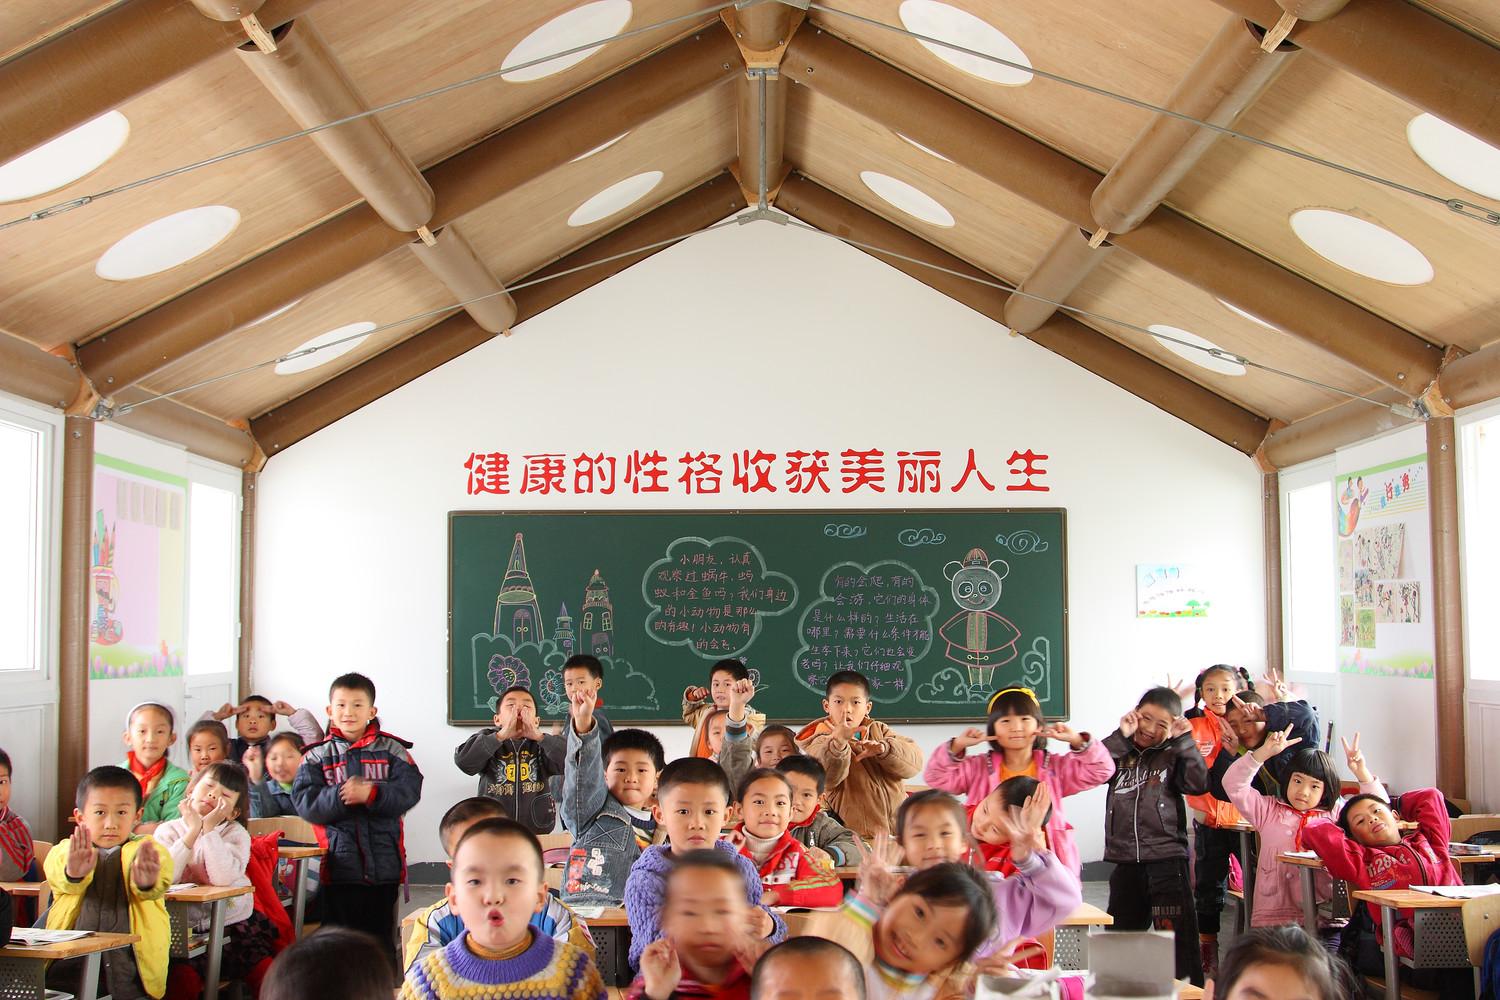 Chengdu Hualin Elementary School